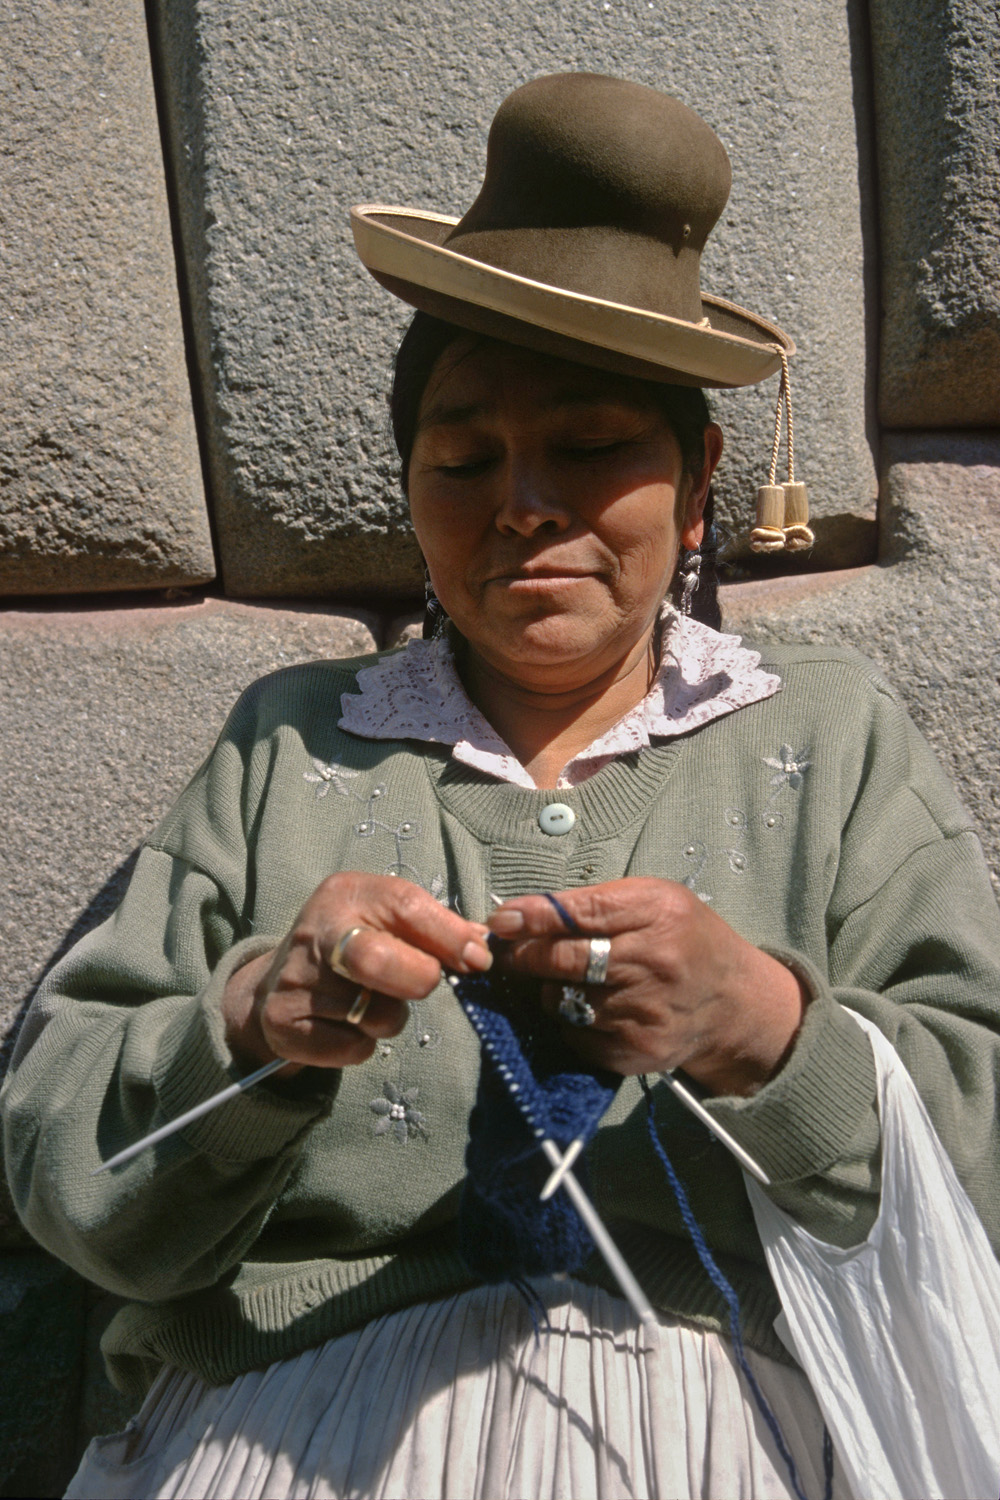 bill-hocker-shopkeeper-cusco-peru-2005